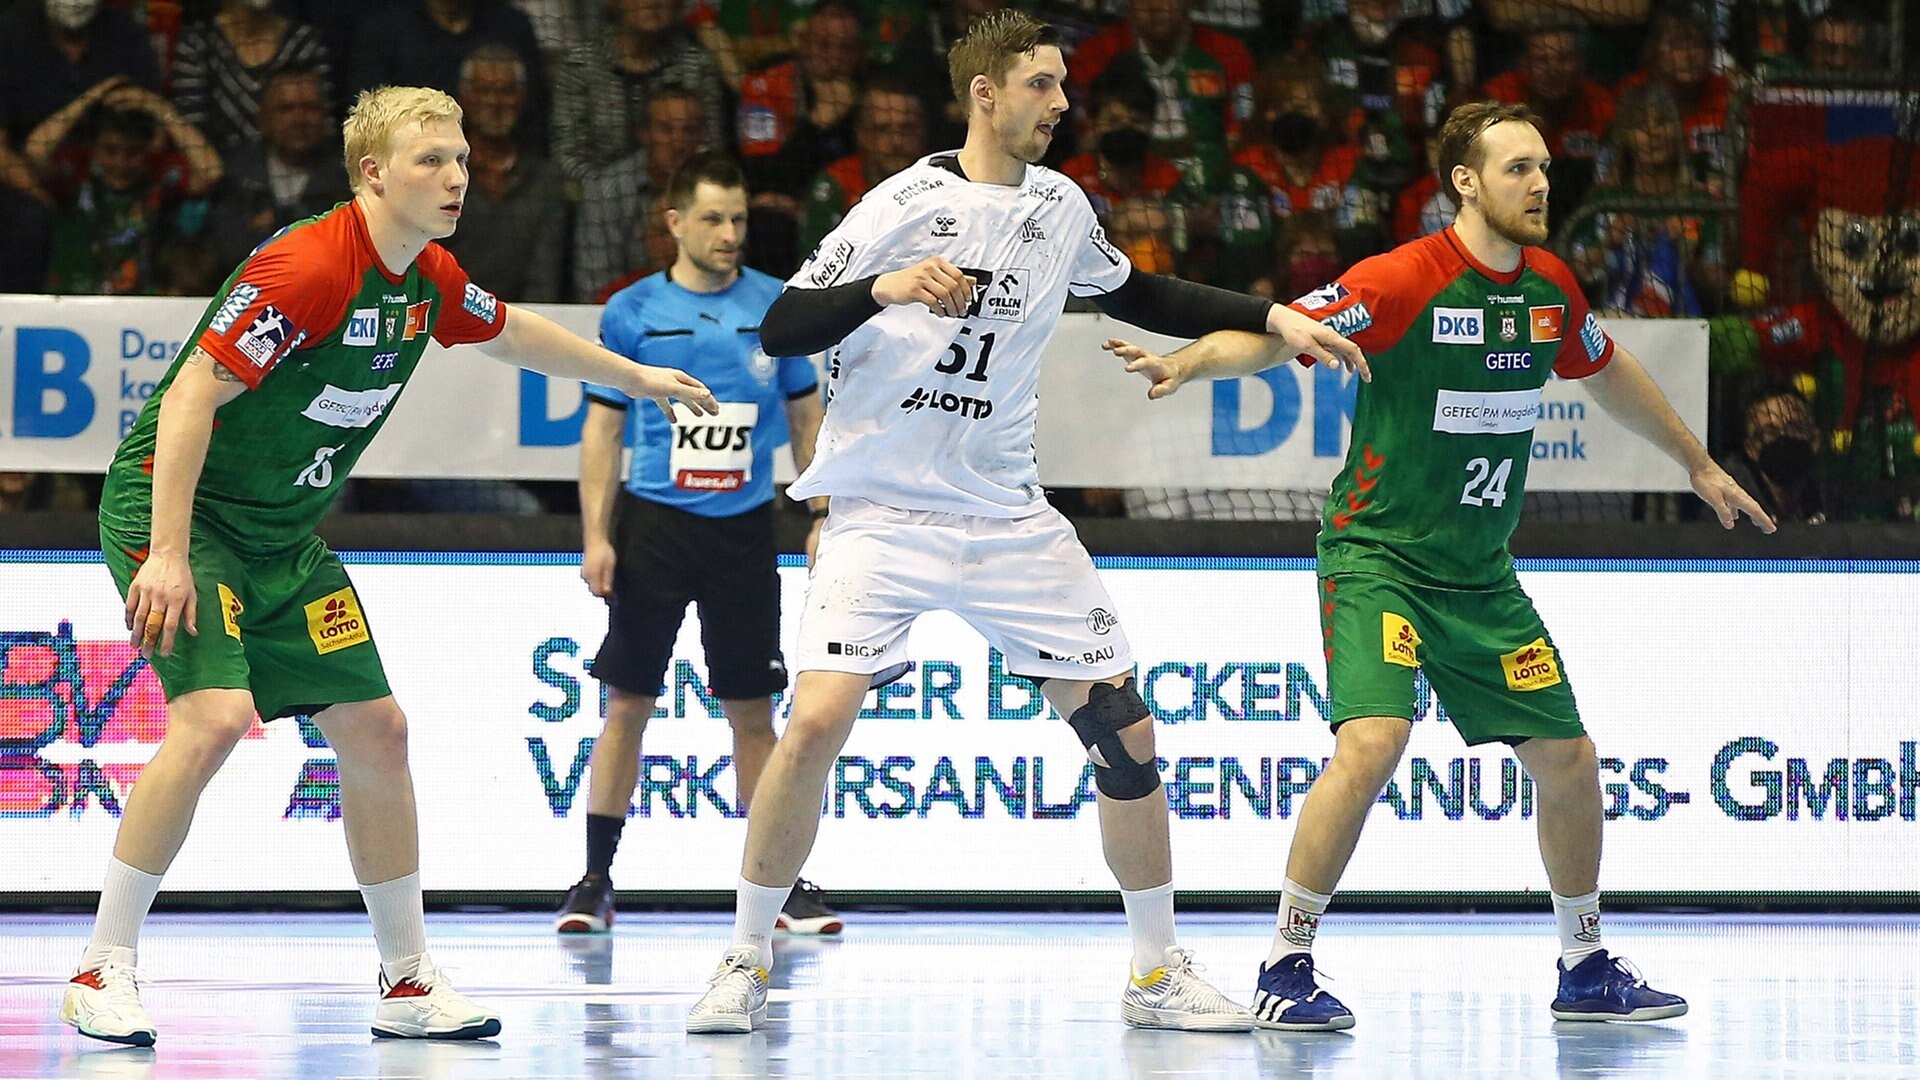 Letzte Handball-Pokalparty in Hamburg - Kiel und Magdeburg Favoriten NDR.de - Sport